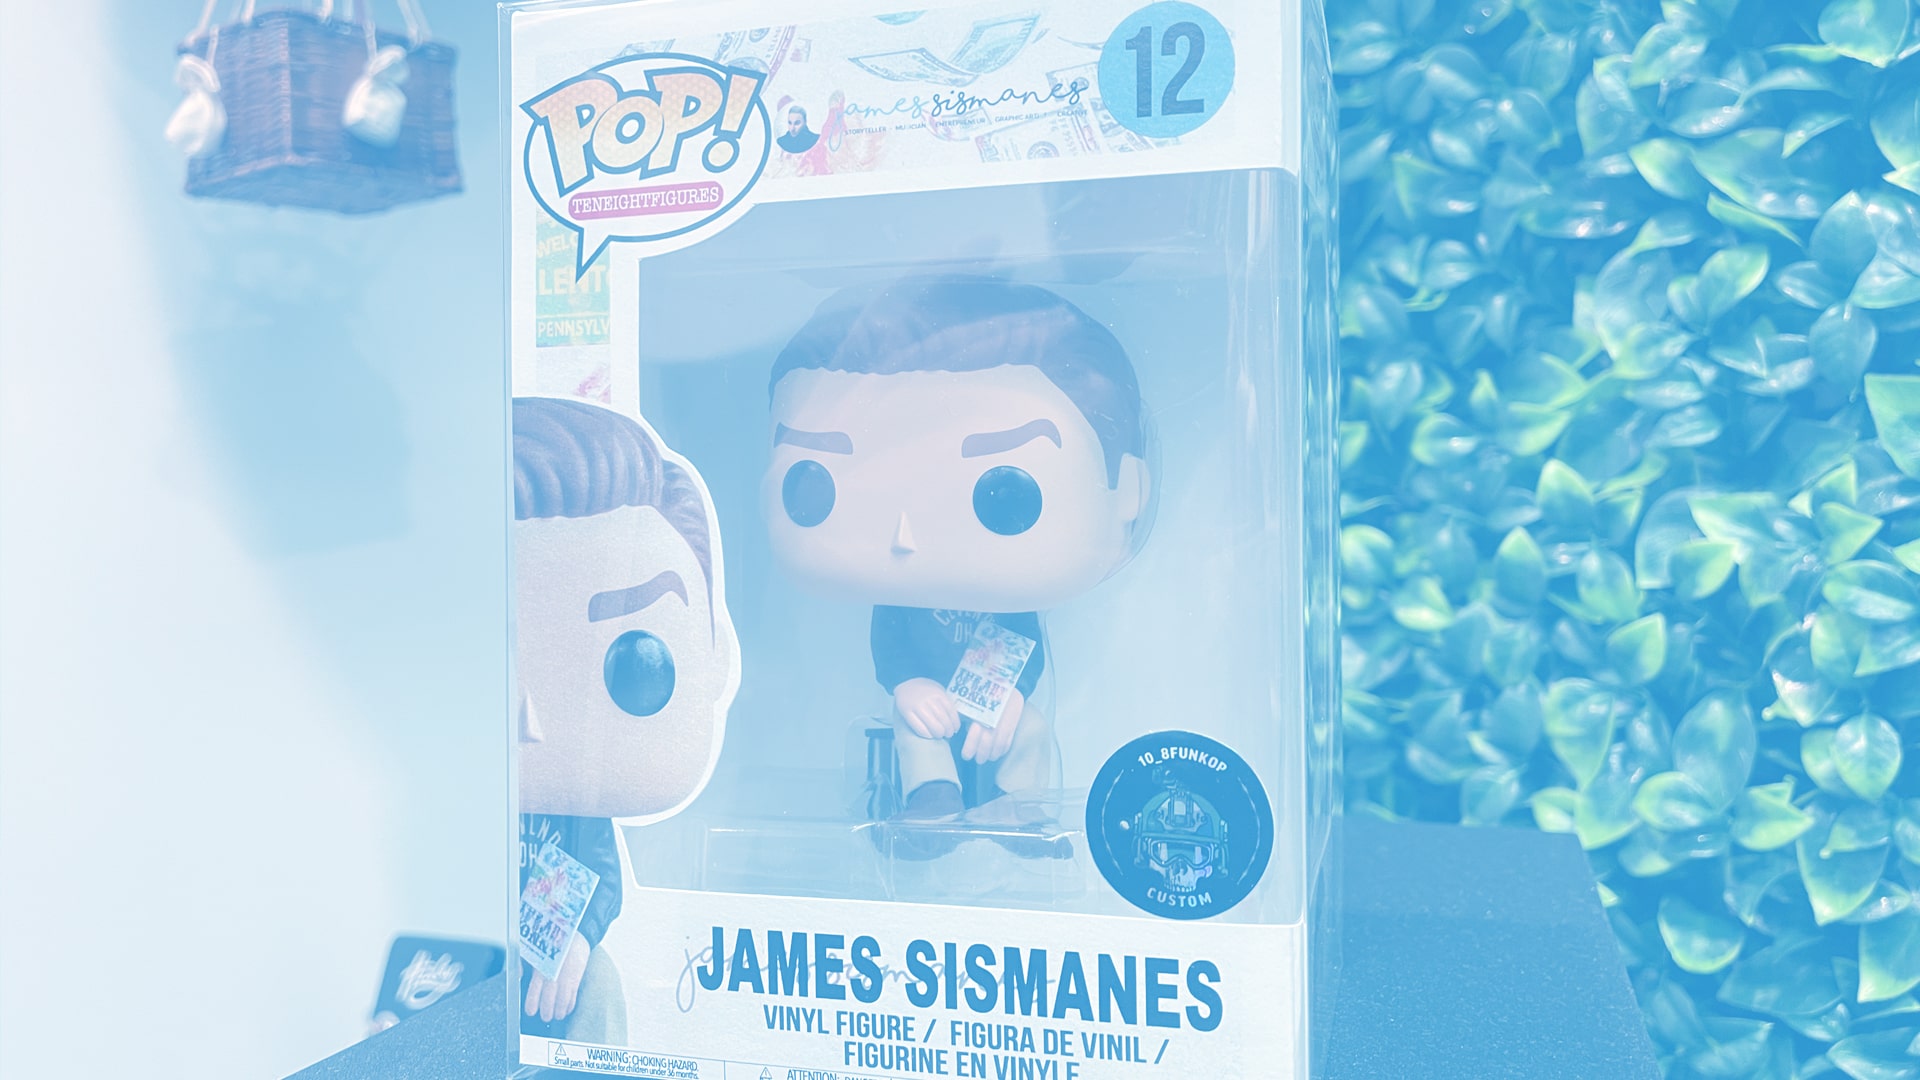 My Custom “James Sismanes Funko Pop!” is here!